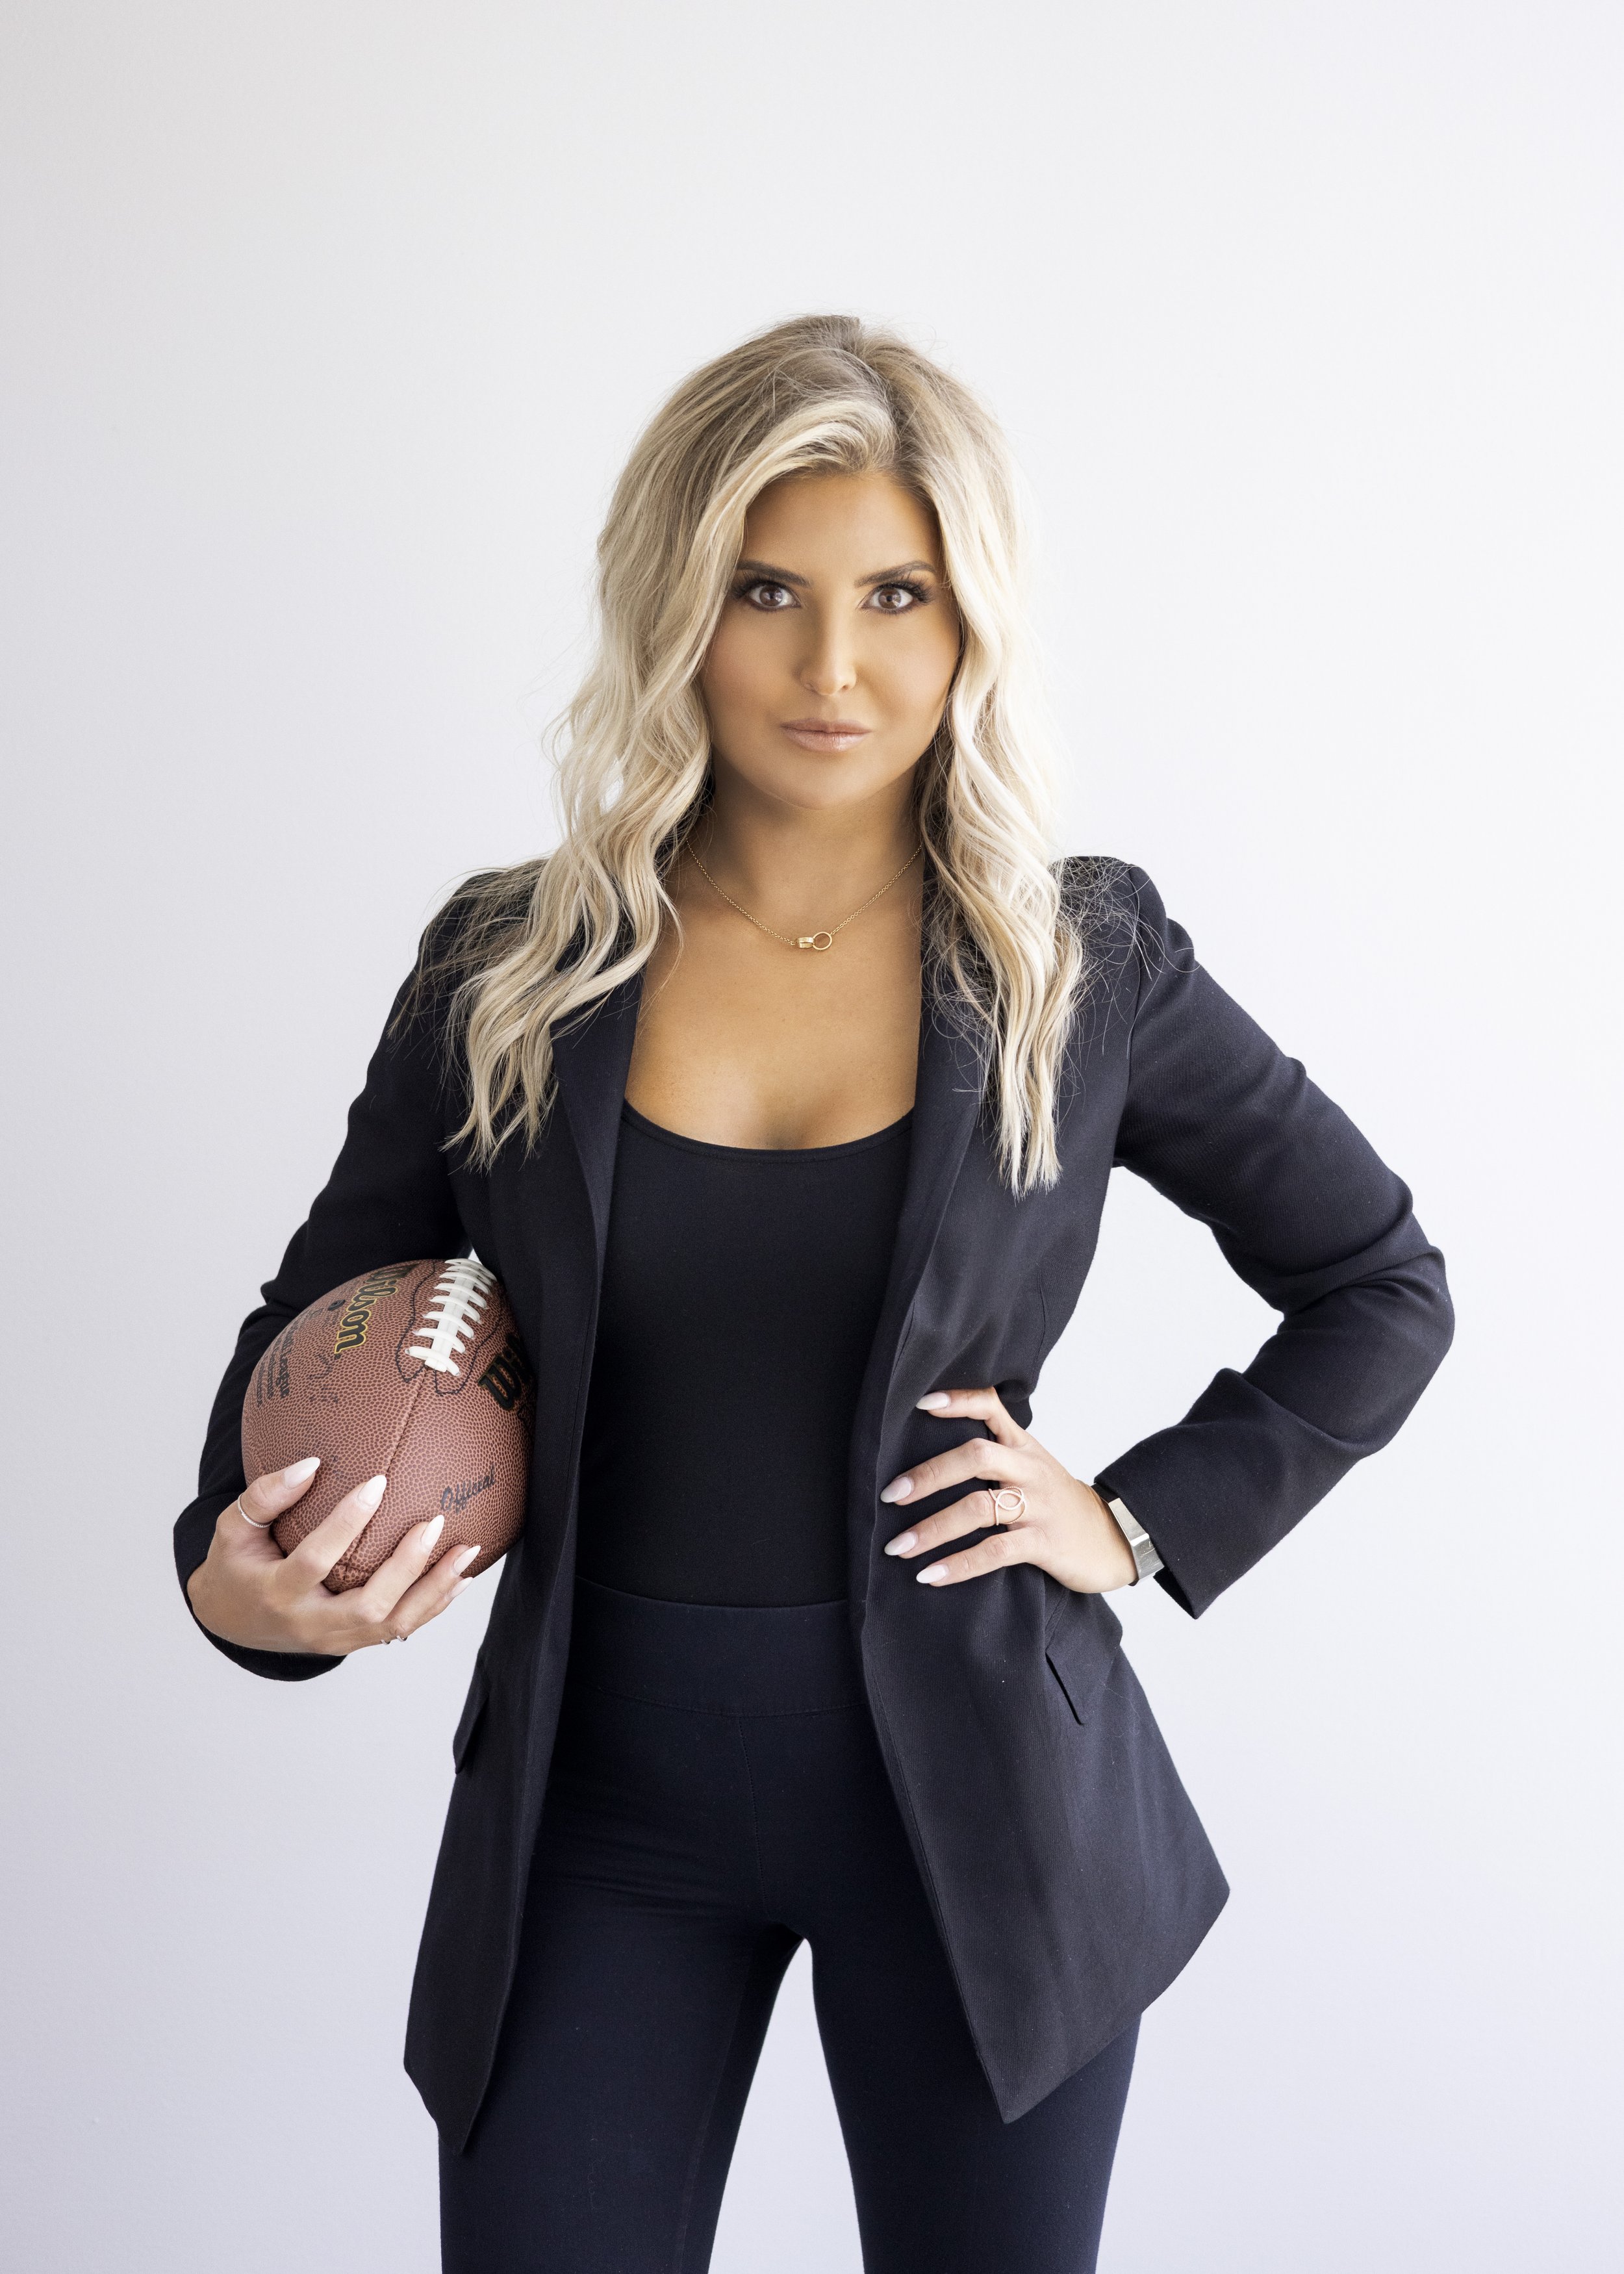 Samantha Sankovich NFL Agent Lifestyle Photo Branding